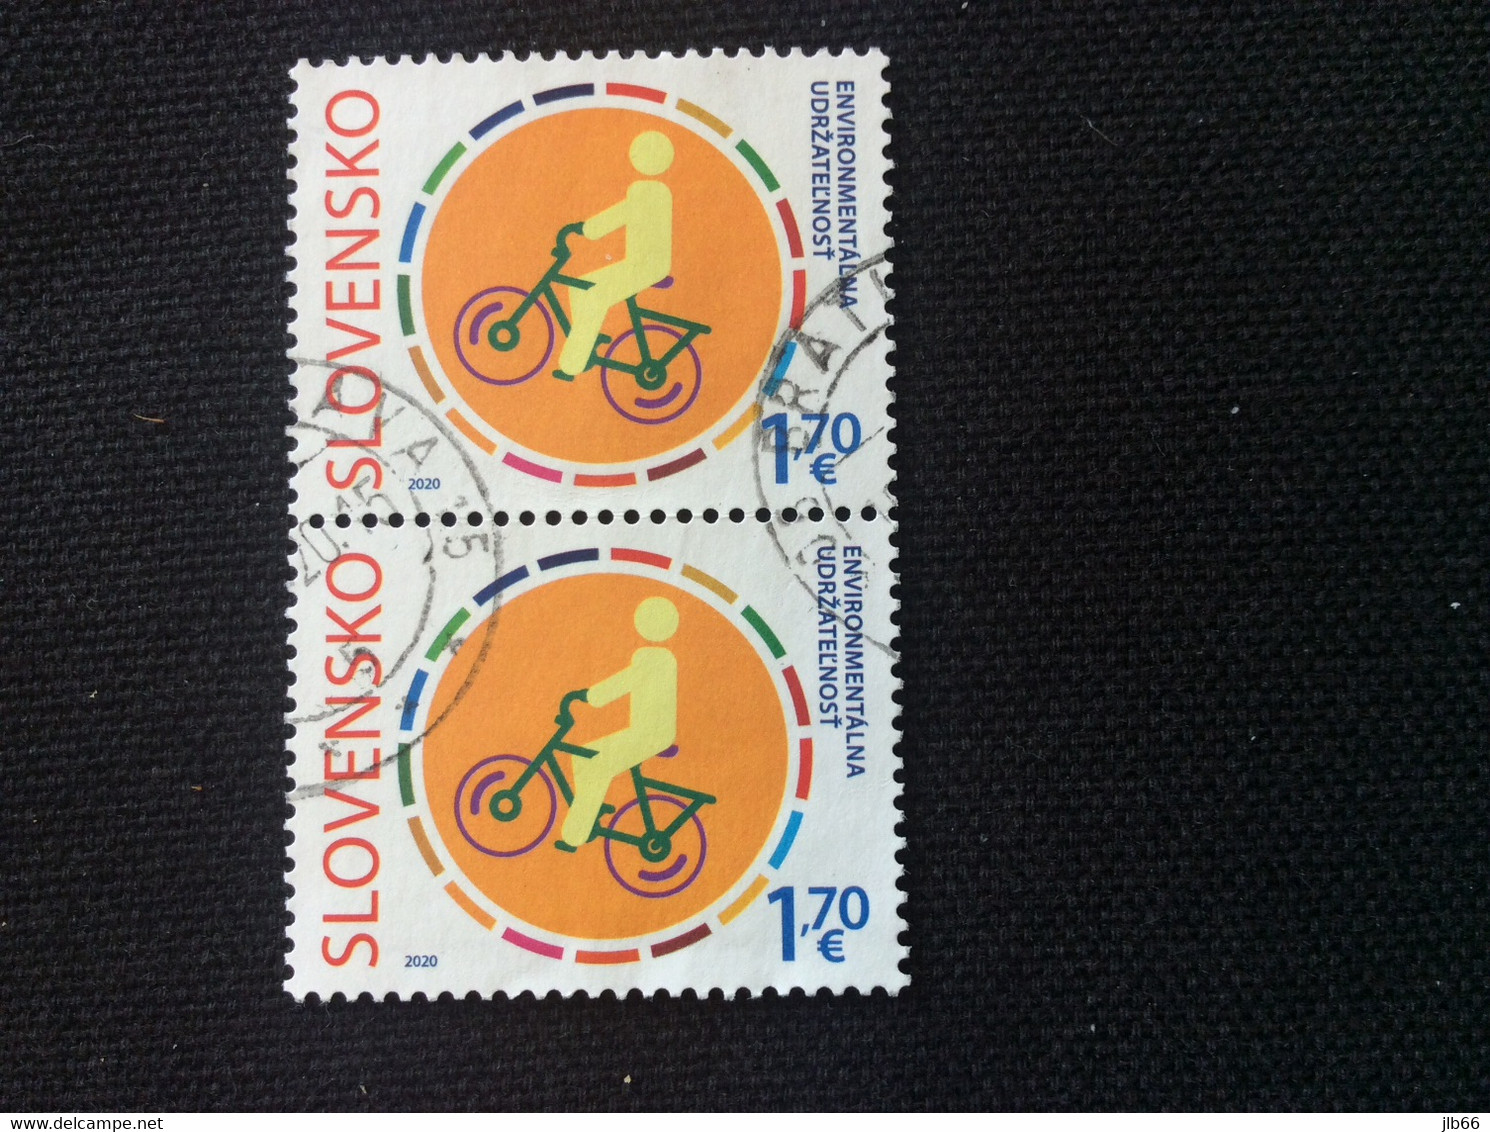 SK 2020 Paire YT 792 Oblitéré Used Act Now Protection Environnement Cyclisme émission Avec Saint Marin - Used Stamps